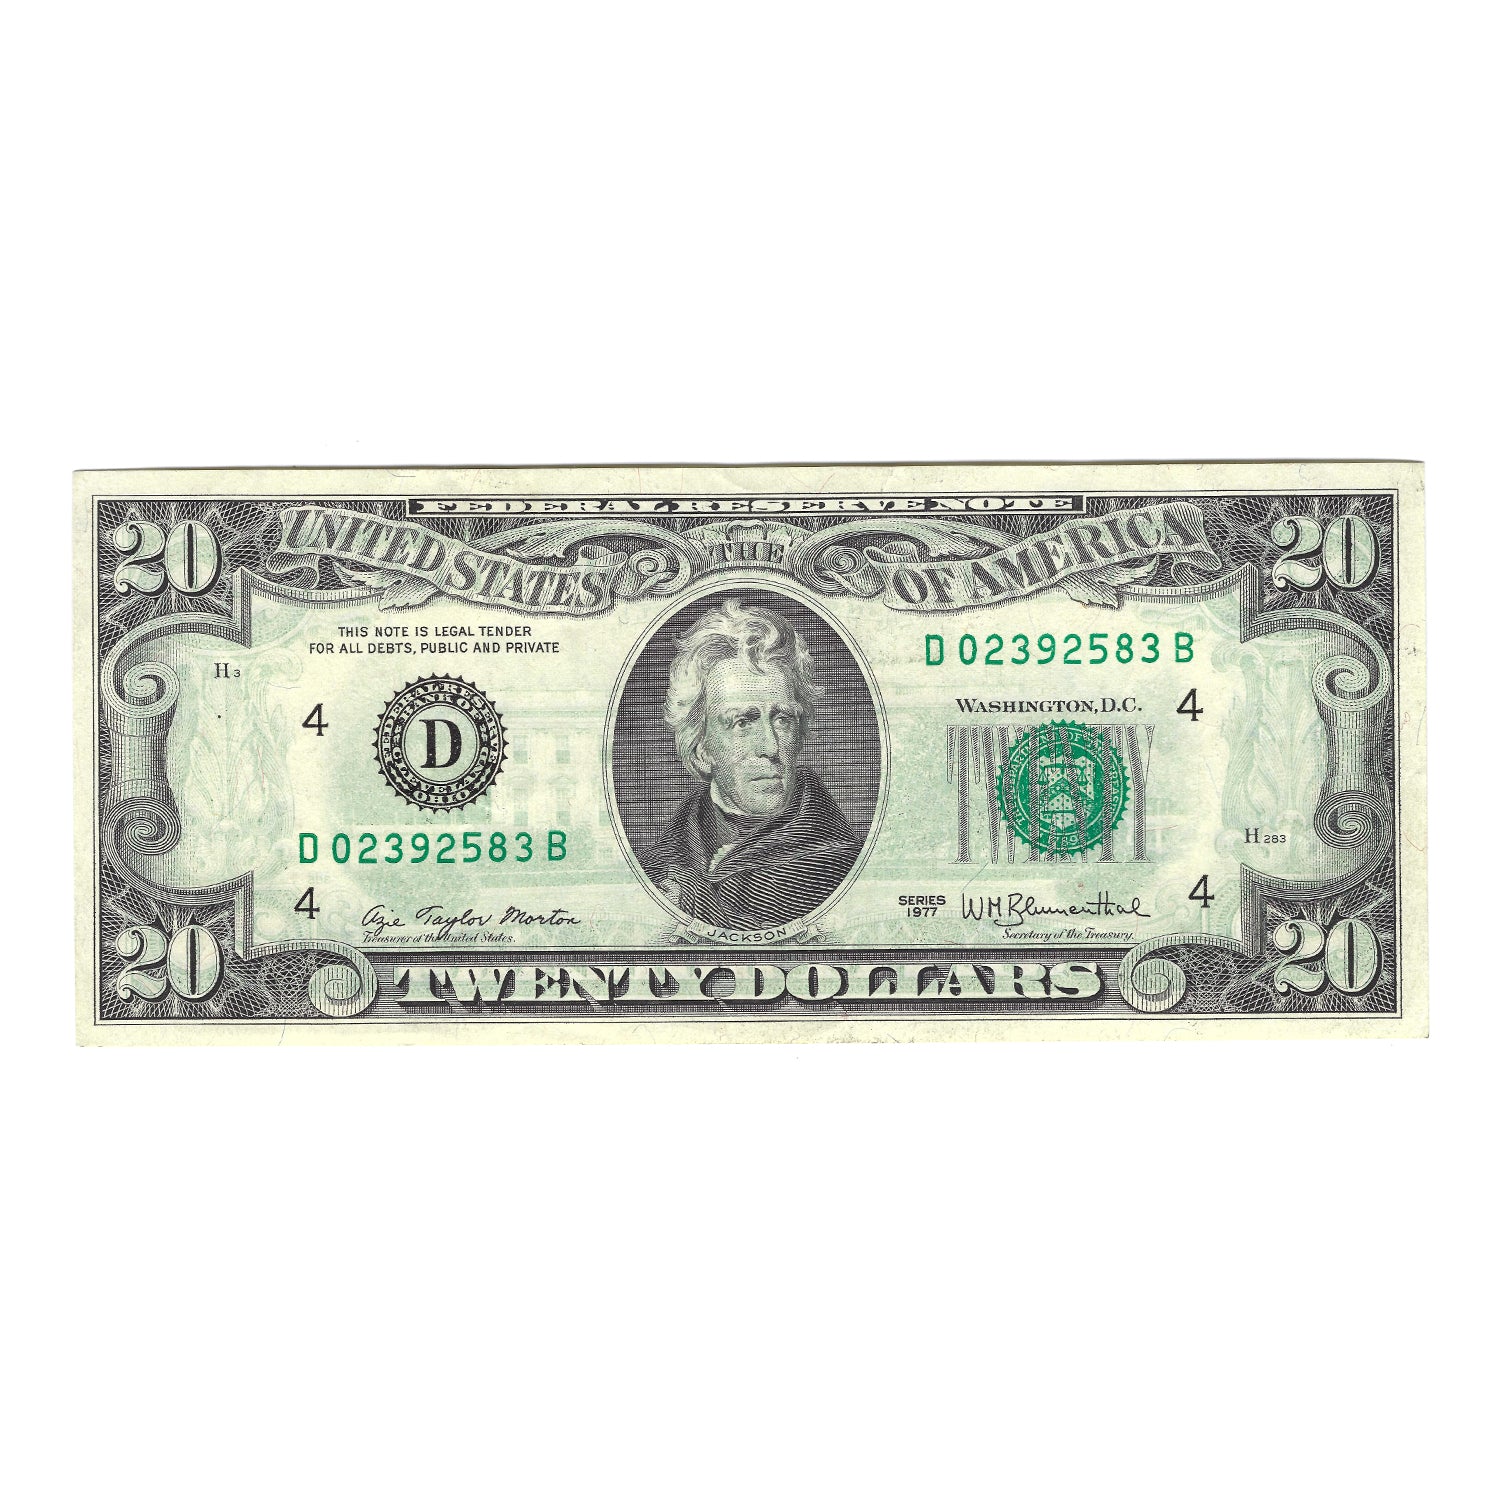 1977 $20 Sm Size Federal Reserve Note, Morton-Blumenthal, Wet Ink Transfer Error, UNC